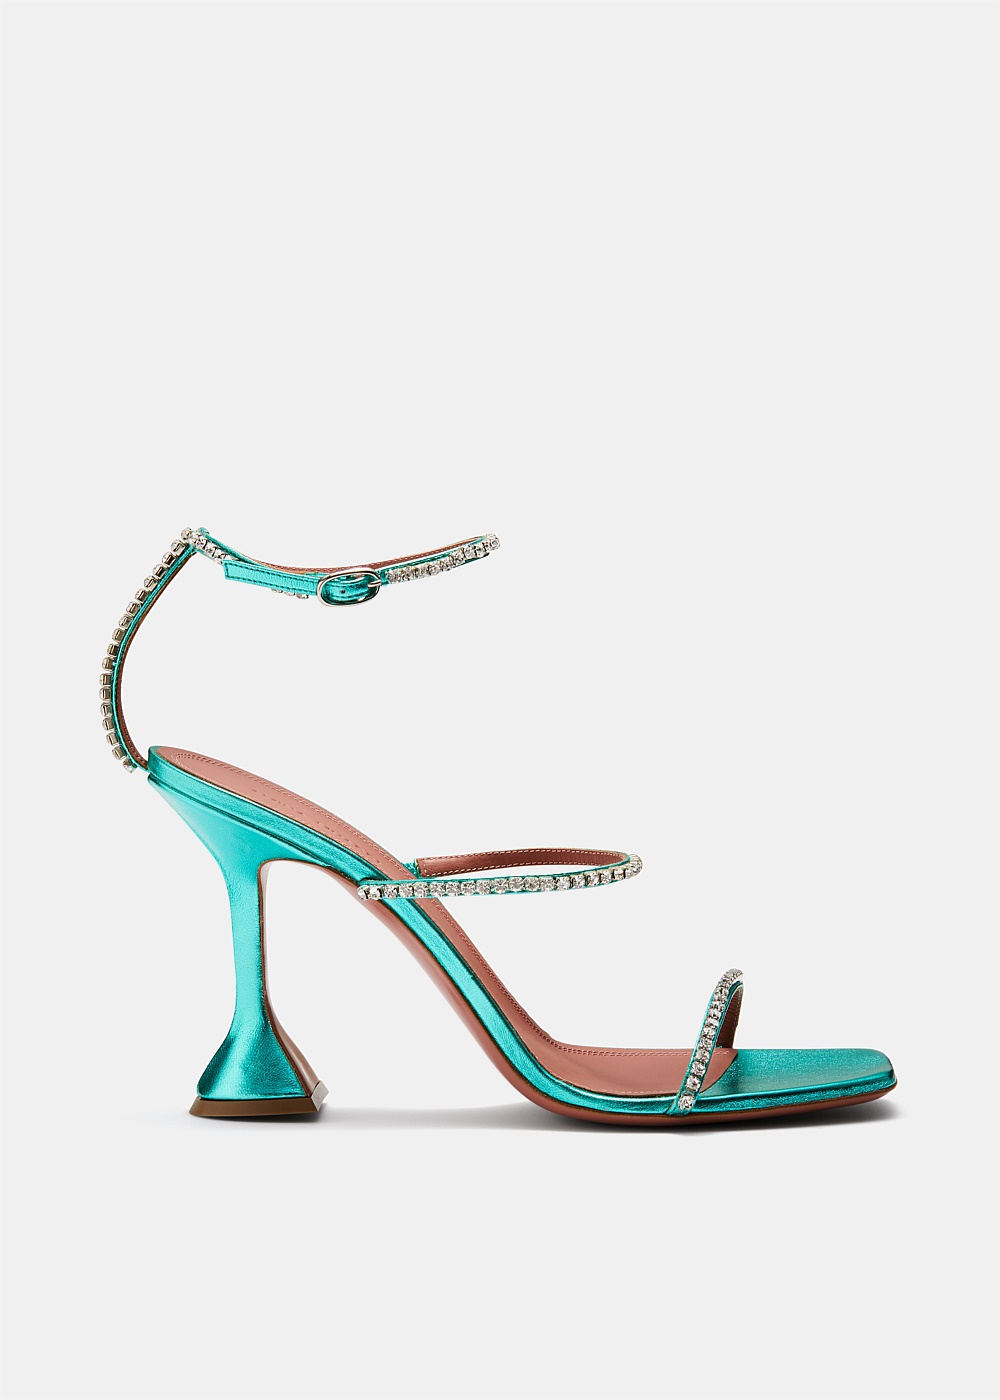 Shop Amina Muaddi Gilda Crystal Embellished Sandals | Harrolds Australia